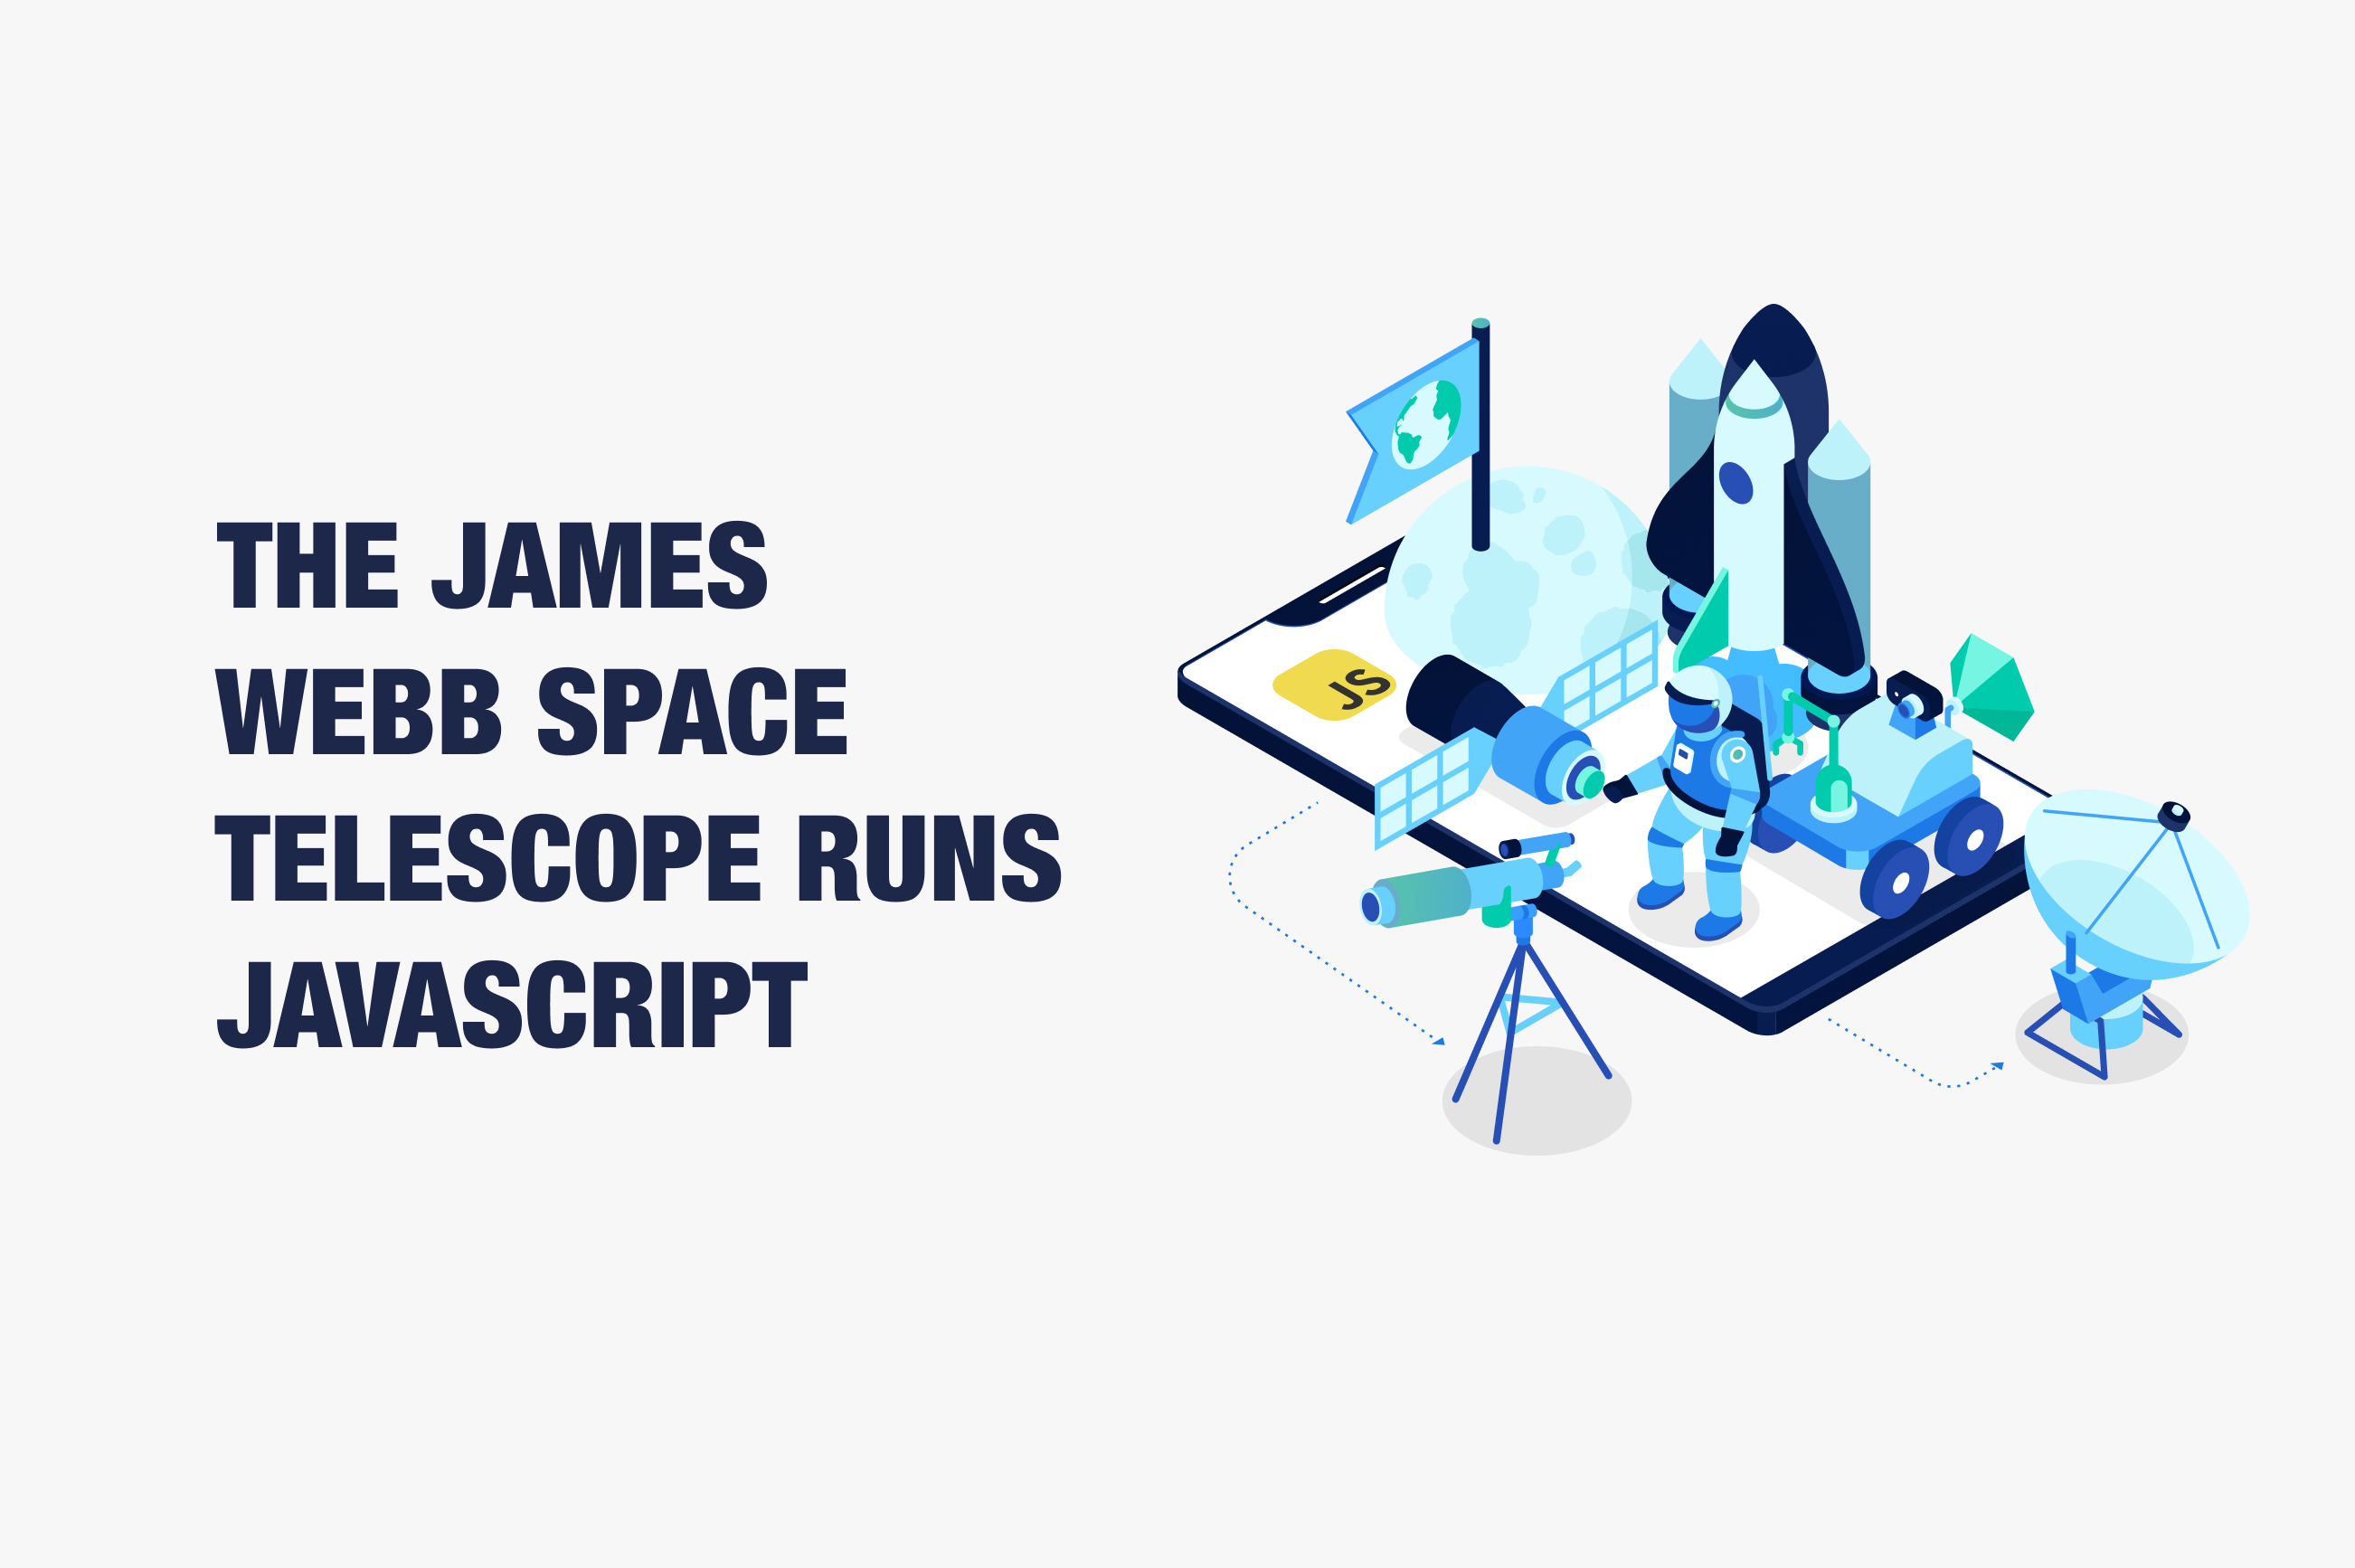 The James Webb Space Telescope runs JavaScript